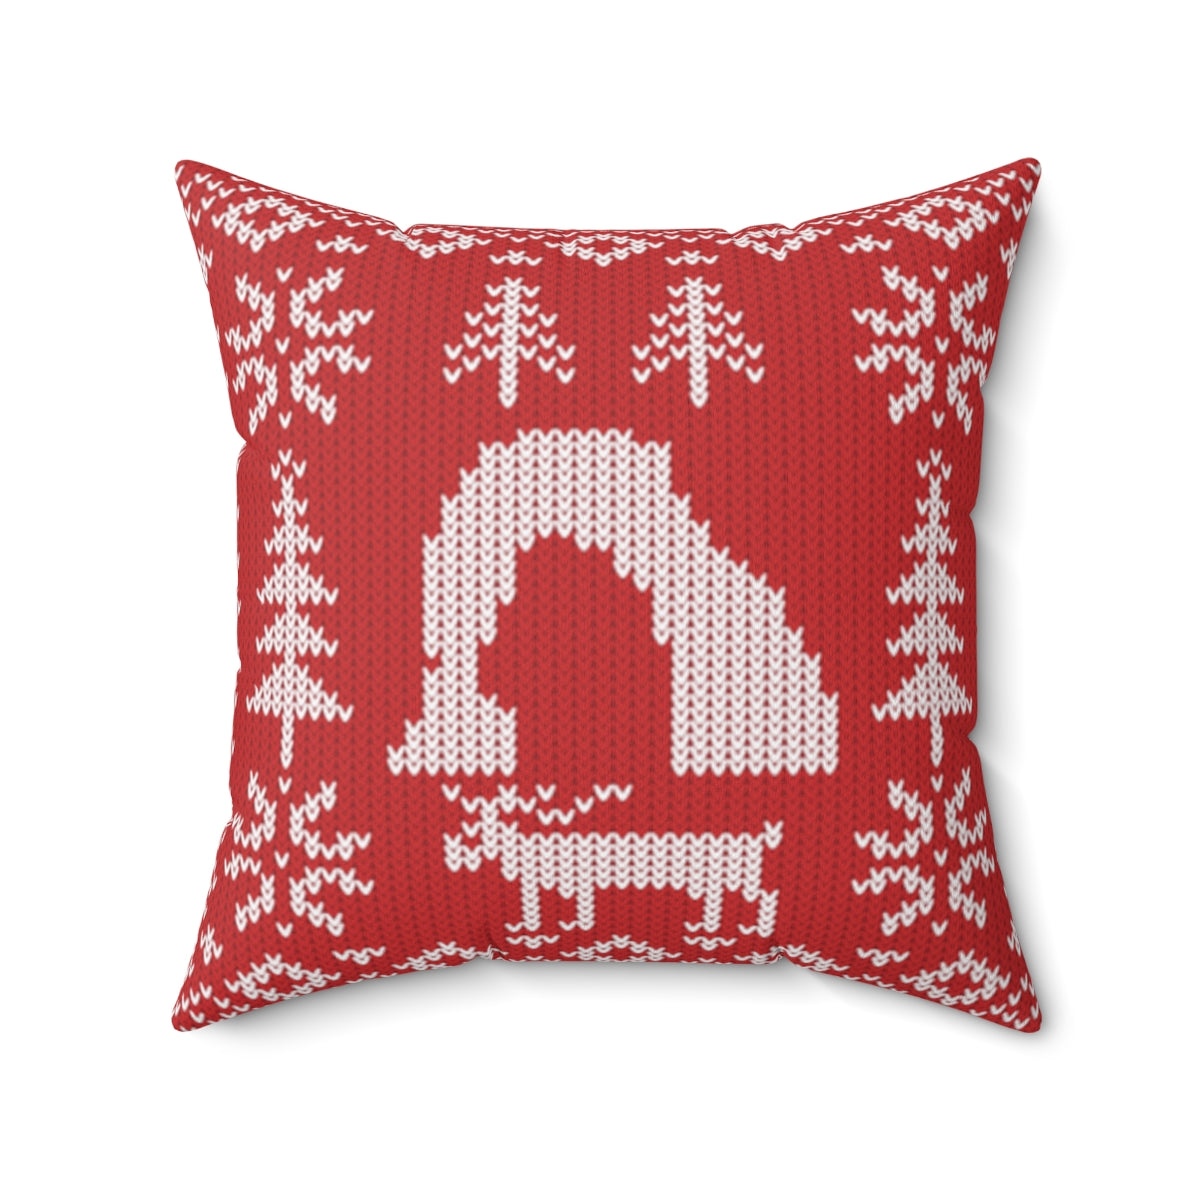 Arches National Park Pillow Cushion - Delicate Arch Fair Isle Pattern